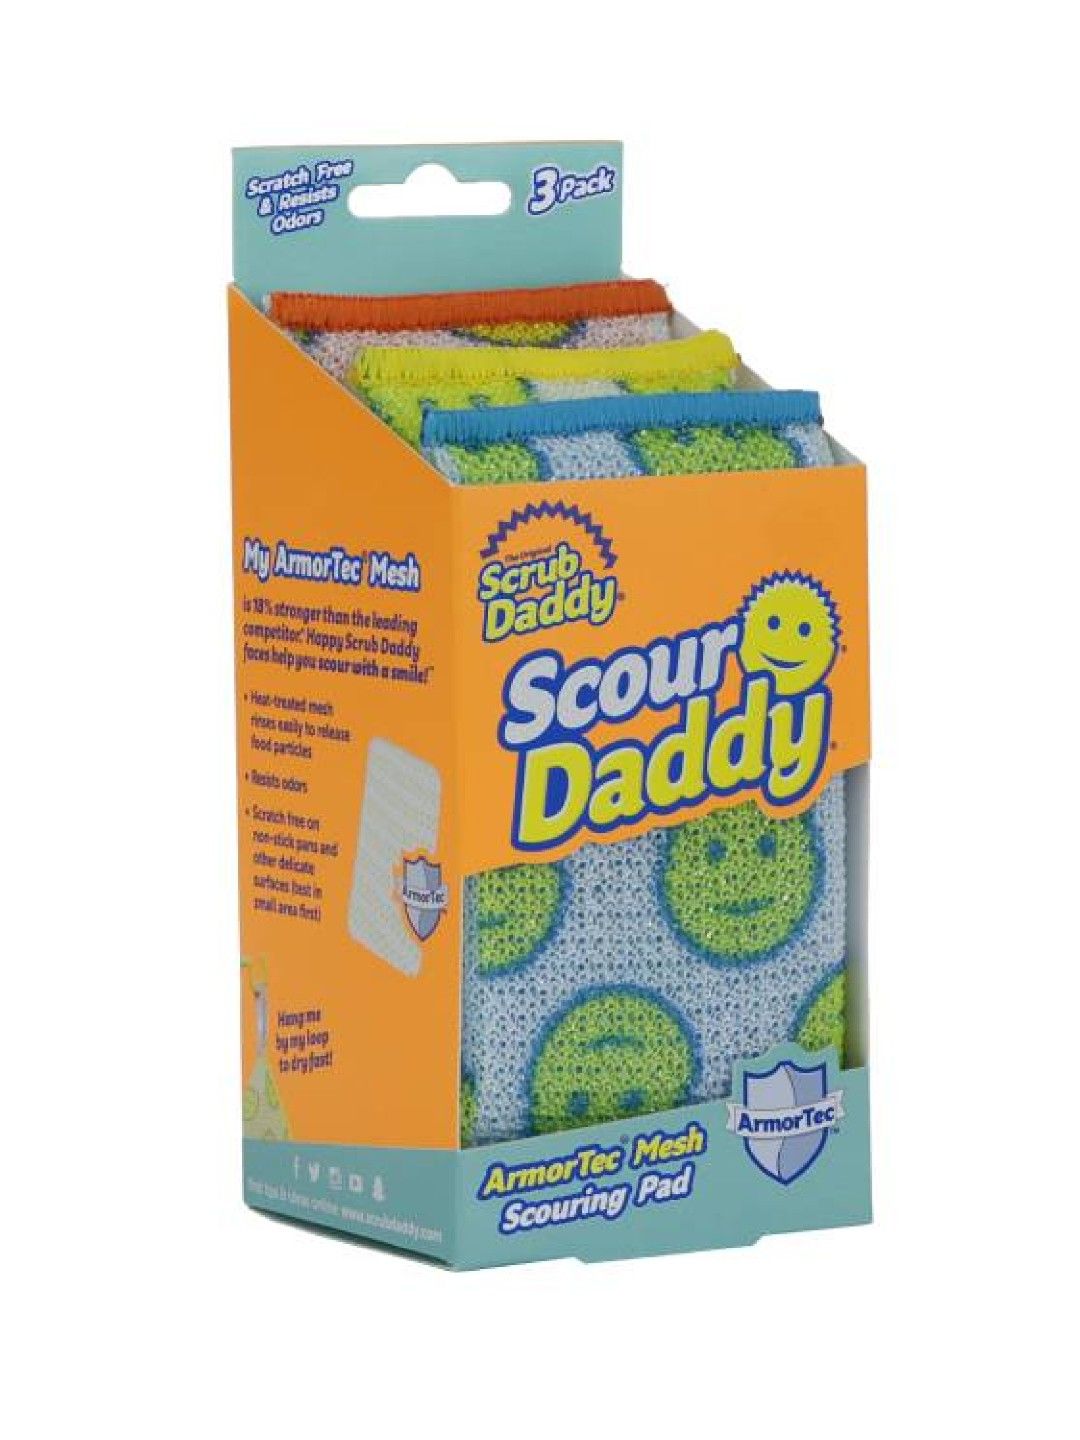 Scrub Daddy Scour Daddy - ArmorTec Mesh Scouring Pad